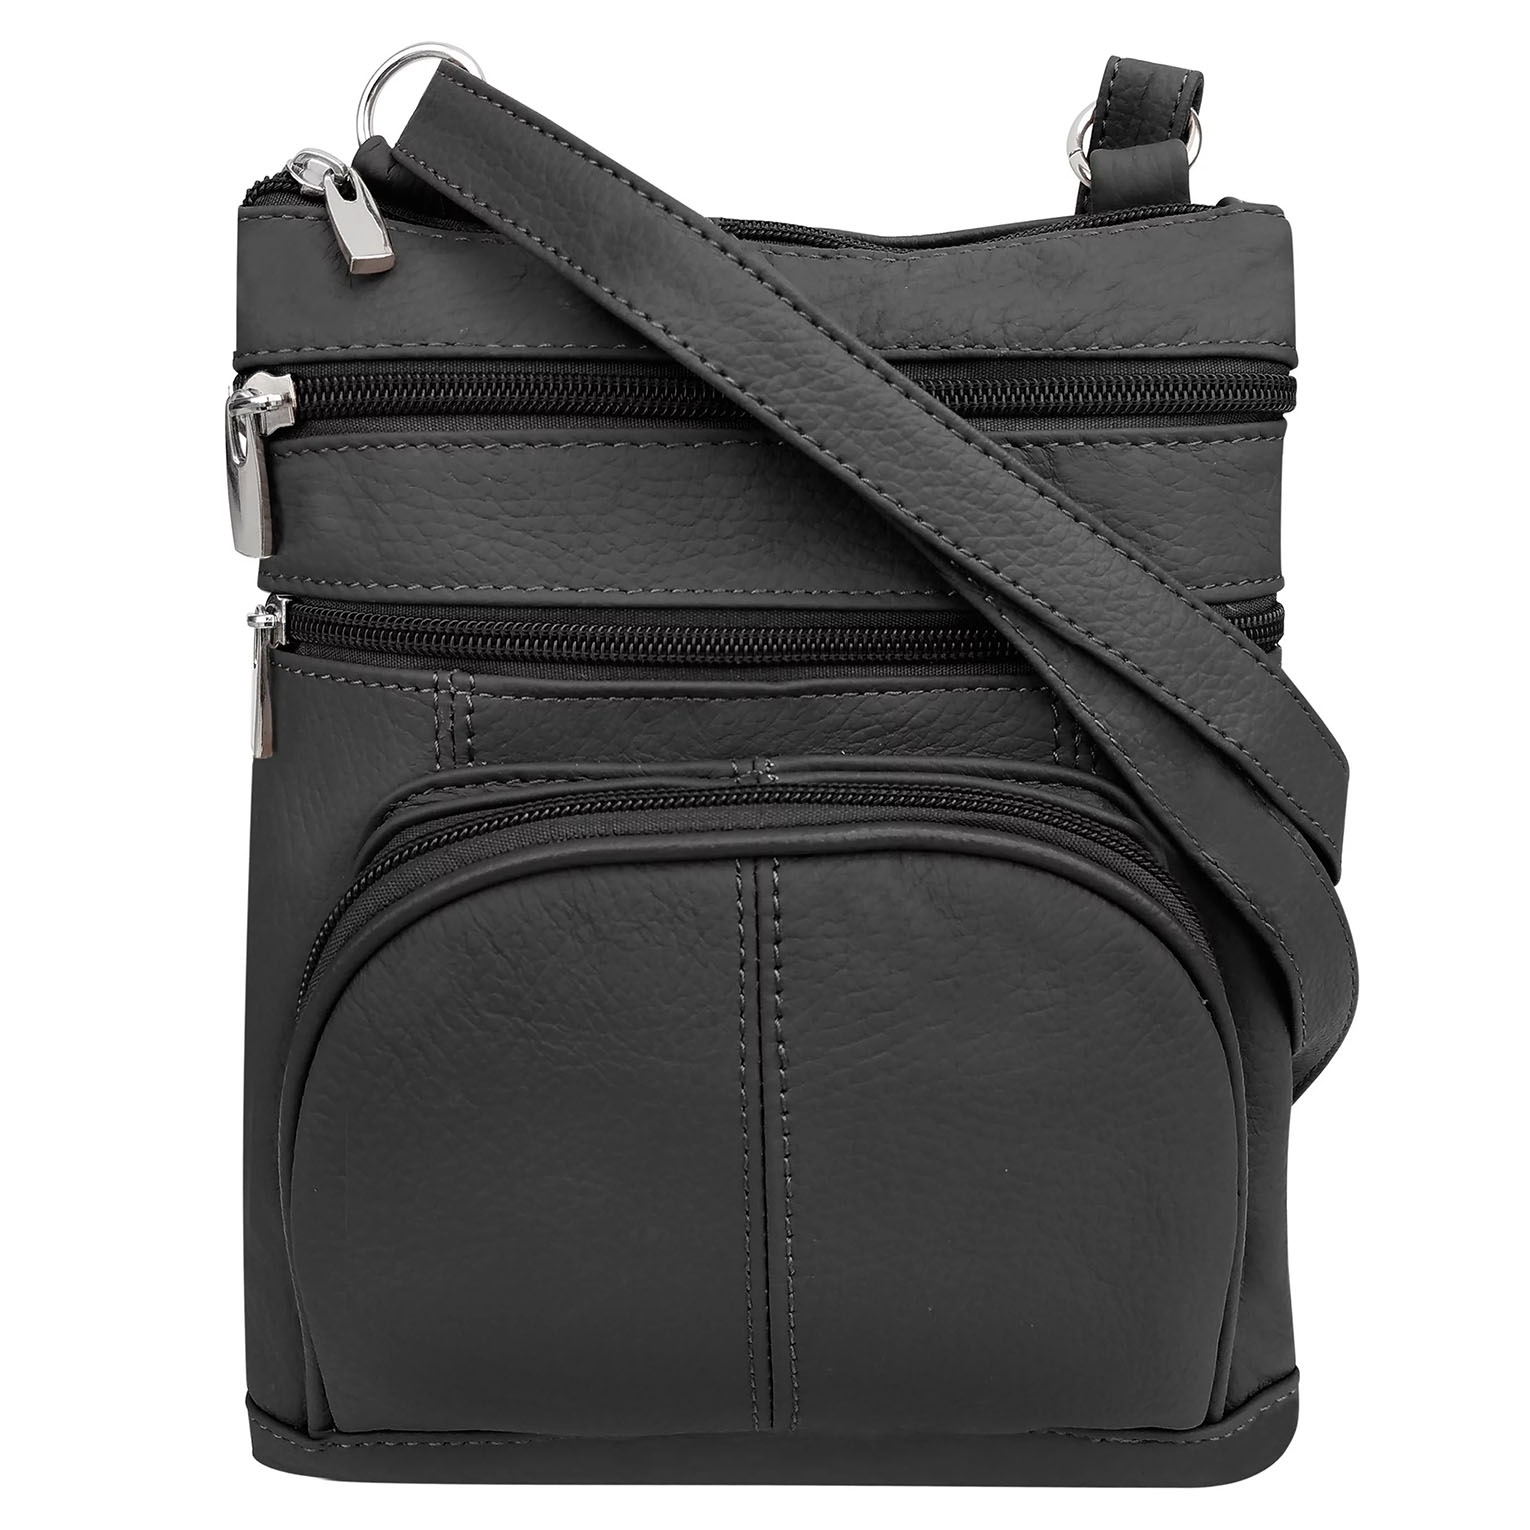 Small Speedy Soft Genuine Leather Black Flap Shoulder Handbag Purse